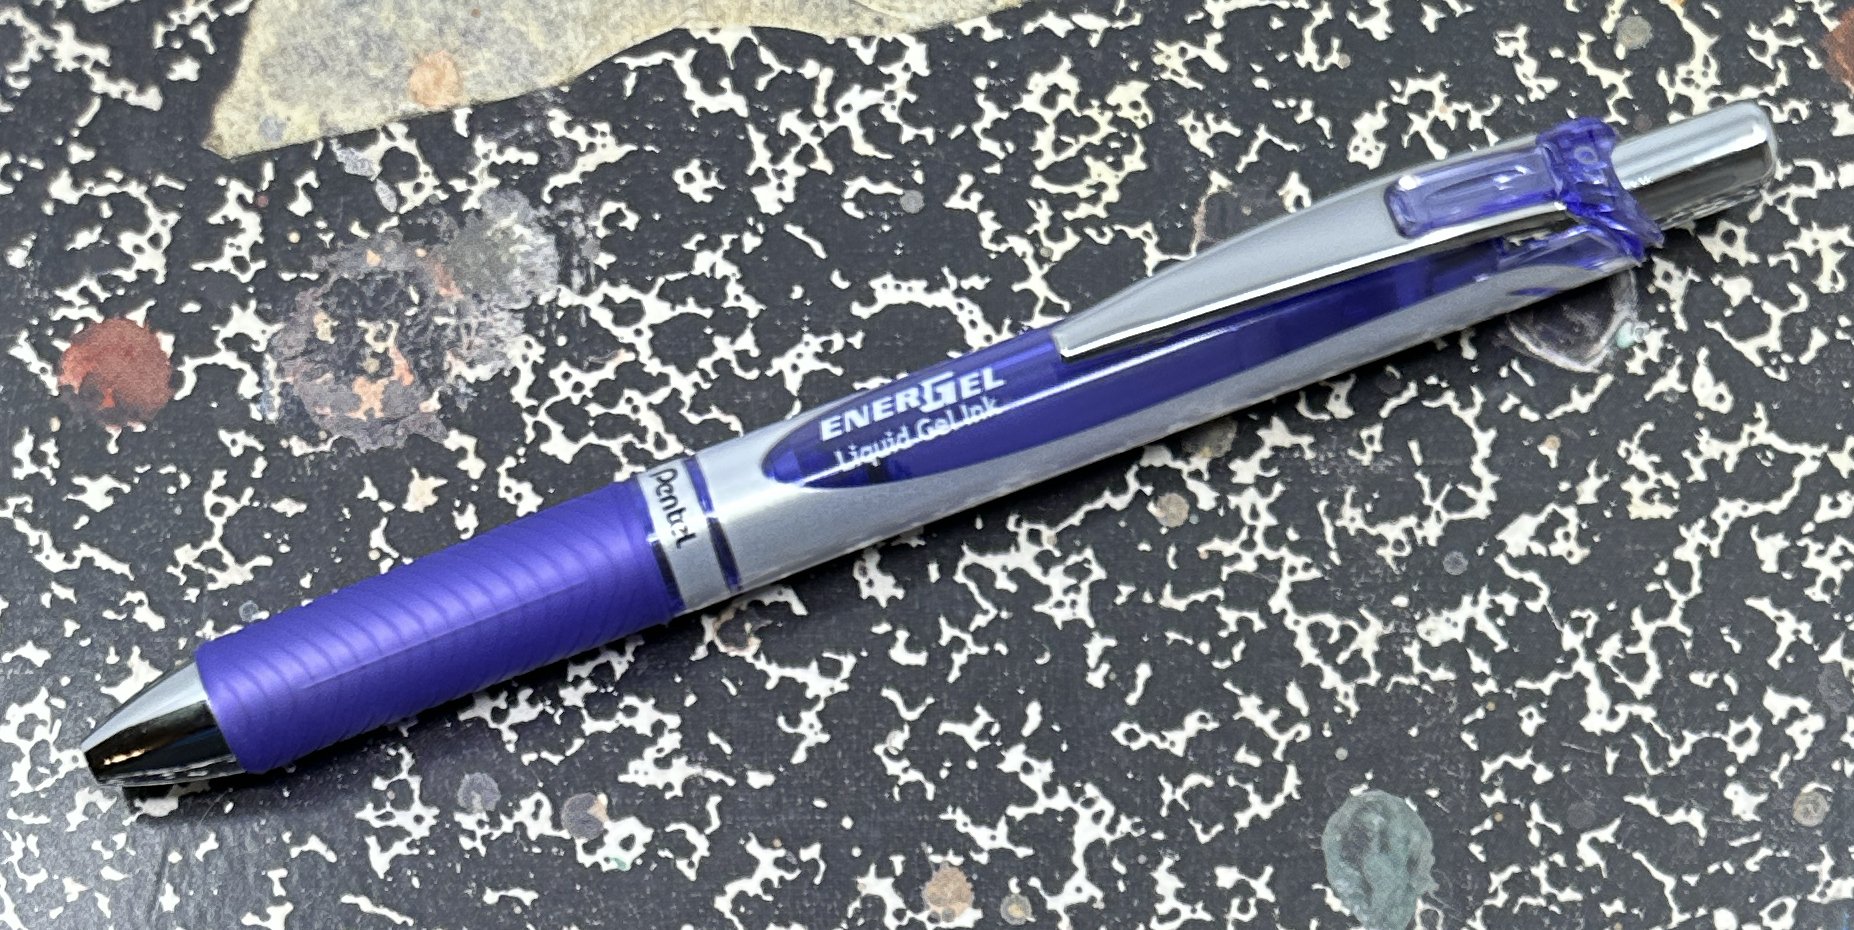 Pentel Energel RTX 0.7 mm Lilac Gel Ink Pen Review — The Pen Addict